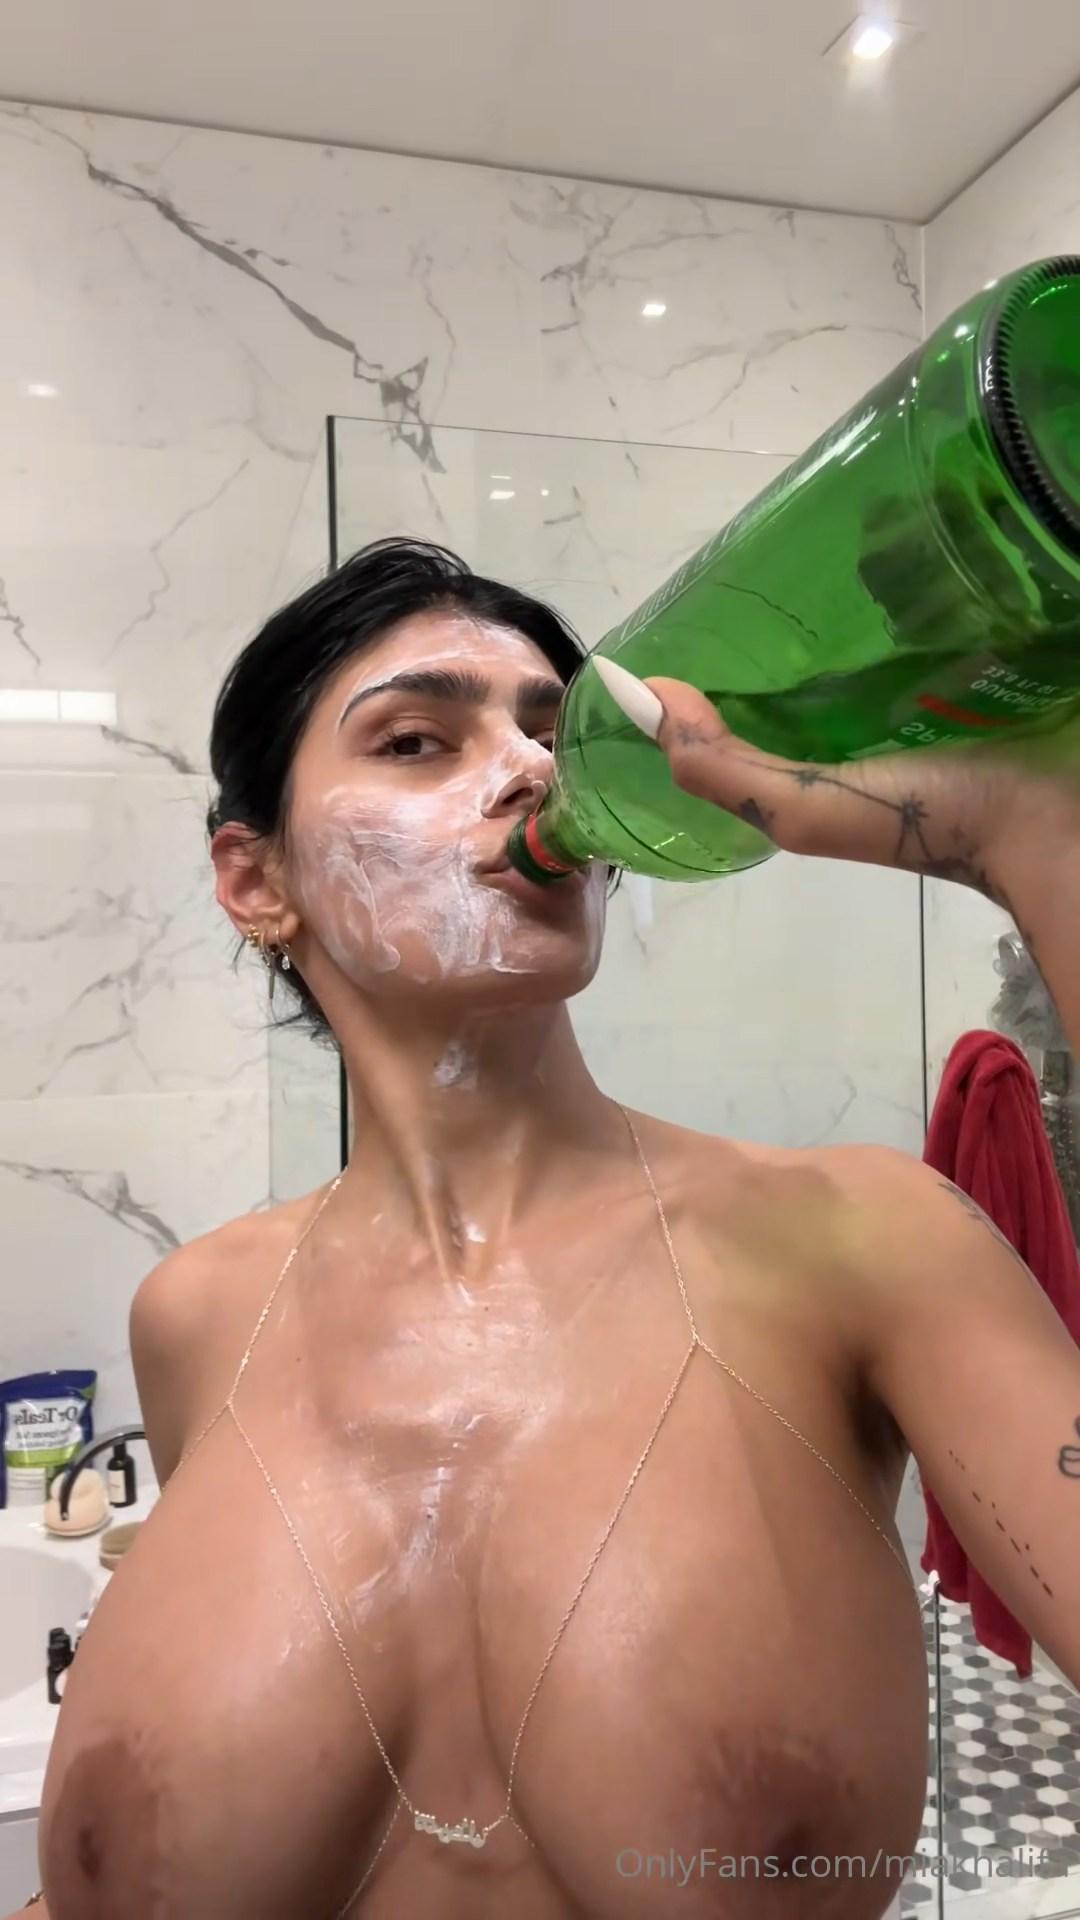 mia khalifa nude shower prep part 2 onlyfans video leaked czlmne